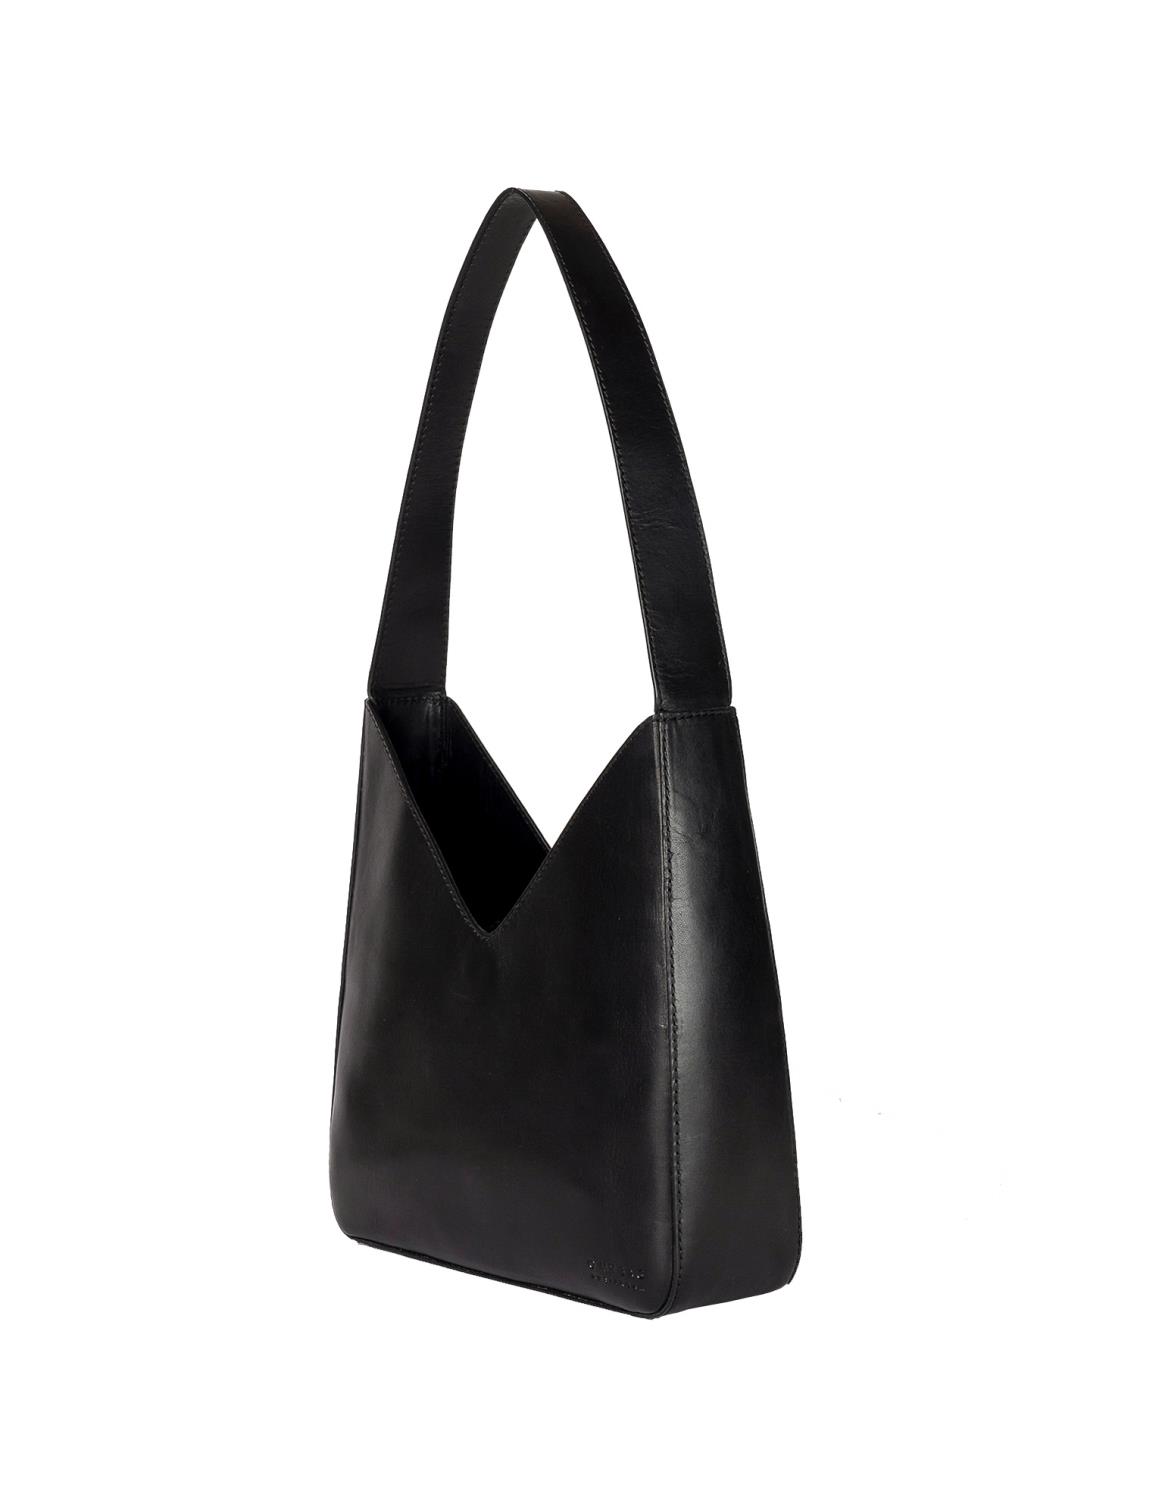 O My Bag - Vicy veske - Black Classic Leather